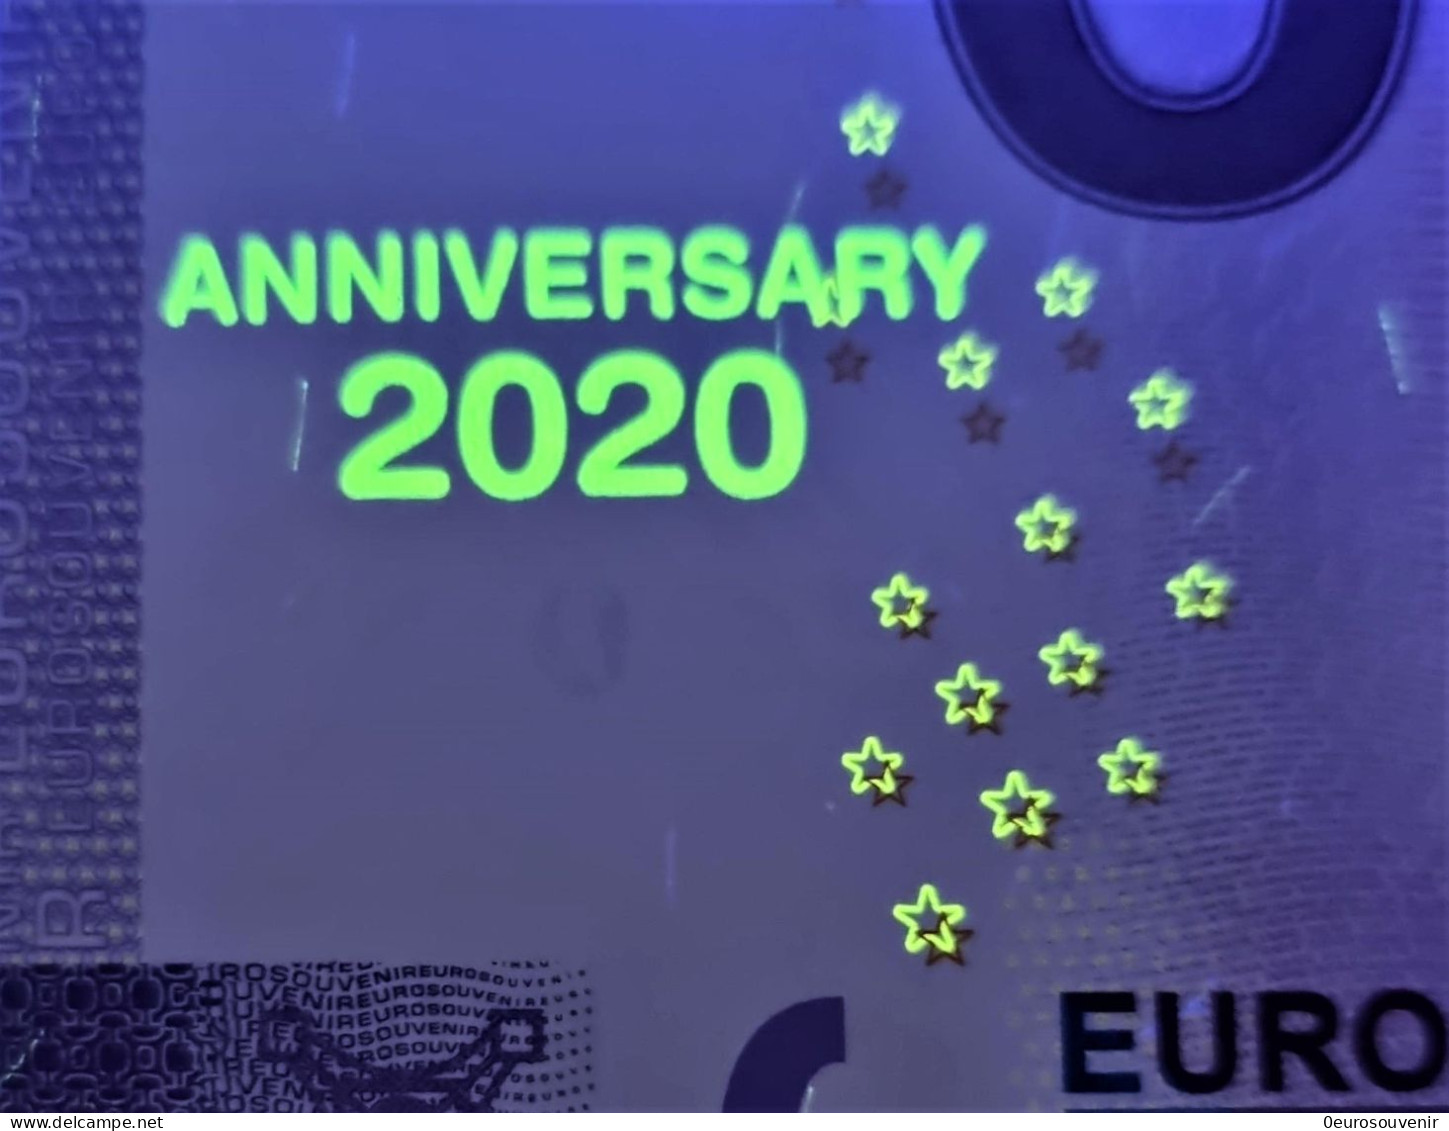 0-Euro XESJ 2021-1 LIMBURG AN DER LAHN Set NORMAL+ANNIVERSARY - Pruebas Privadas